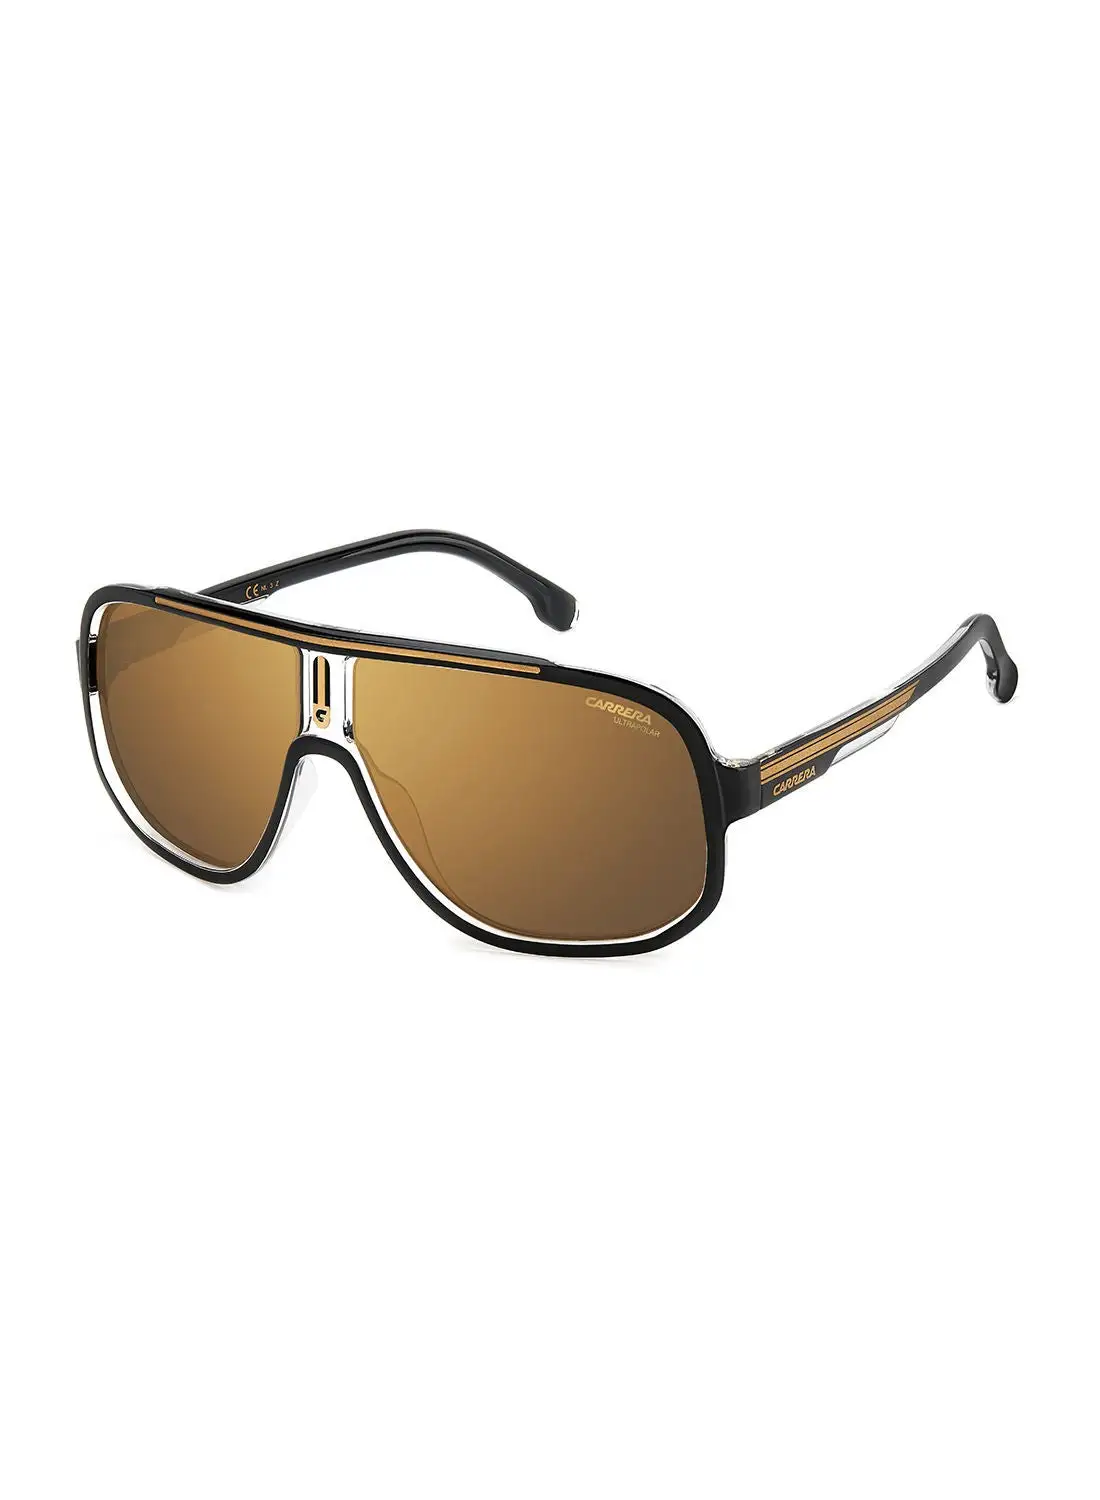 Carrera Men's UV Protection Navigator Sunglasses - Carrera 1058/S Black/Gold 63 - Lens Size: 63 Mm